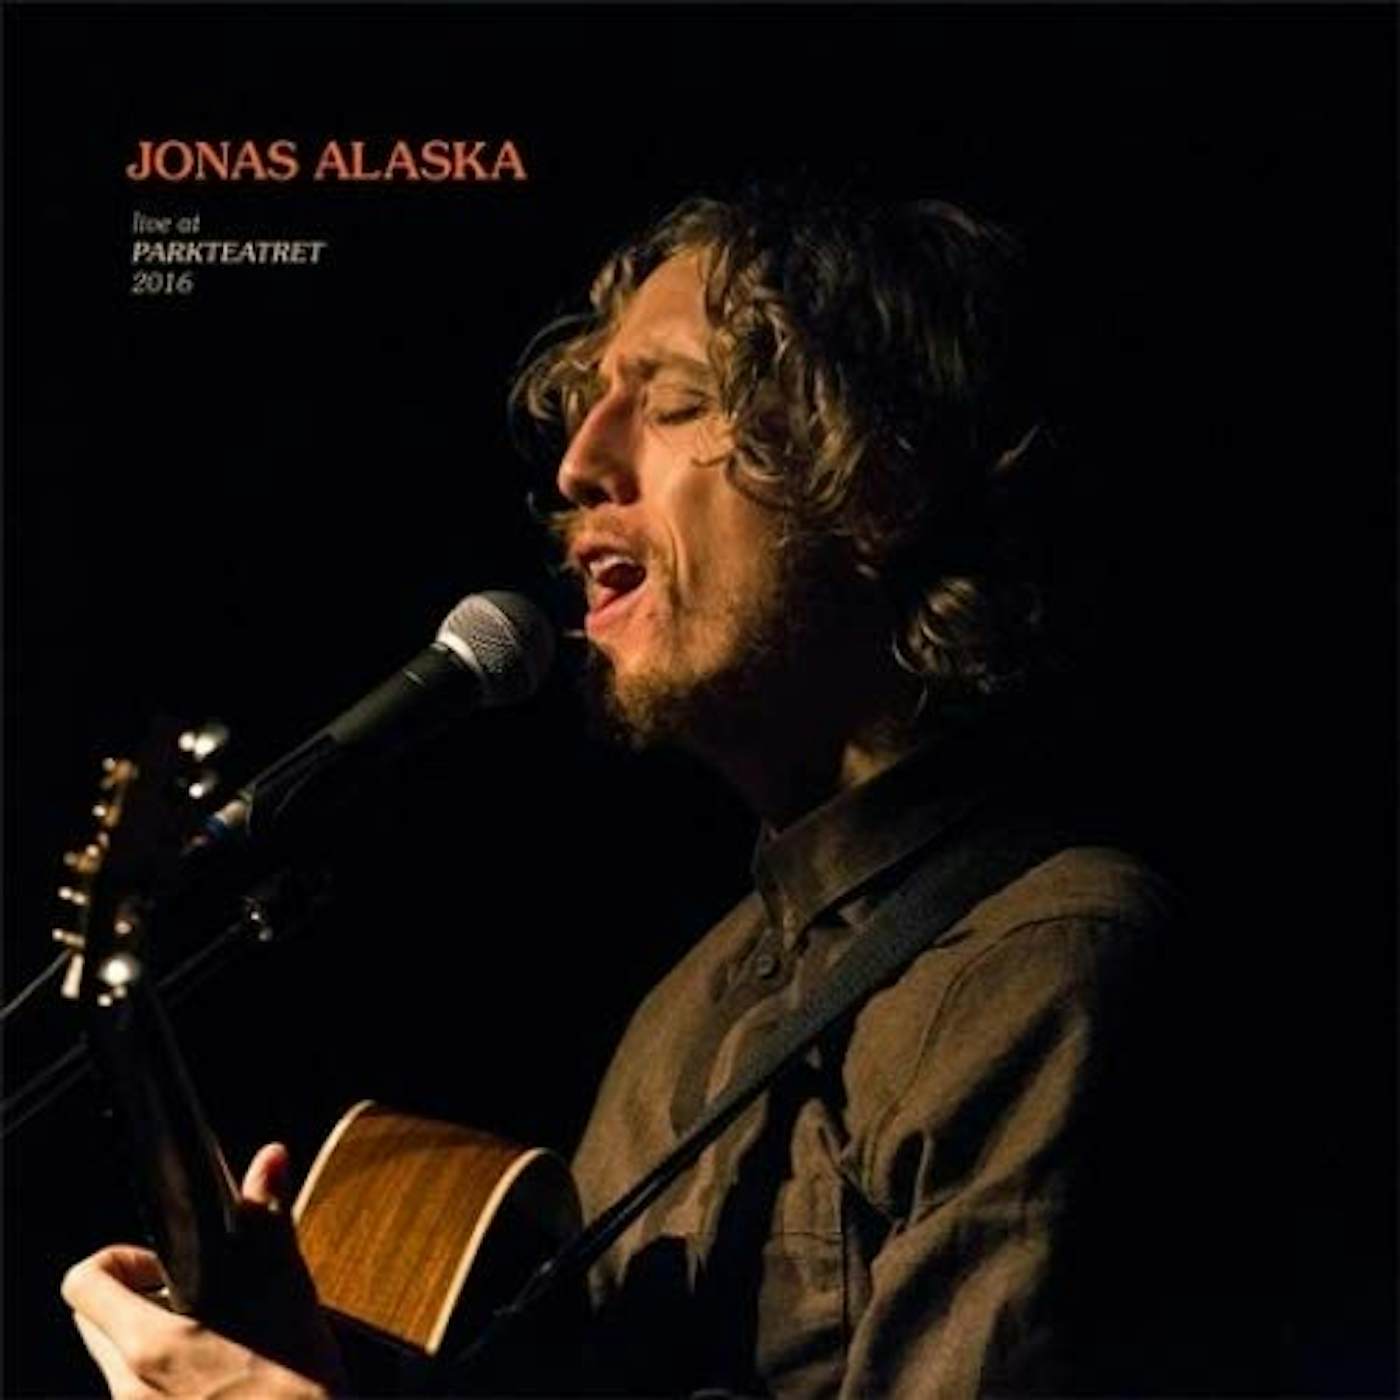 Jonas Alaska LIVE AT PARKTEATRET Vinyl Record